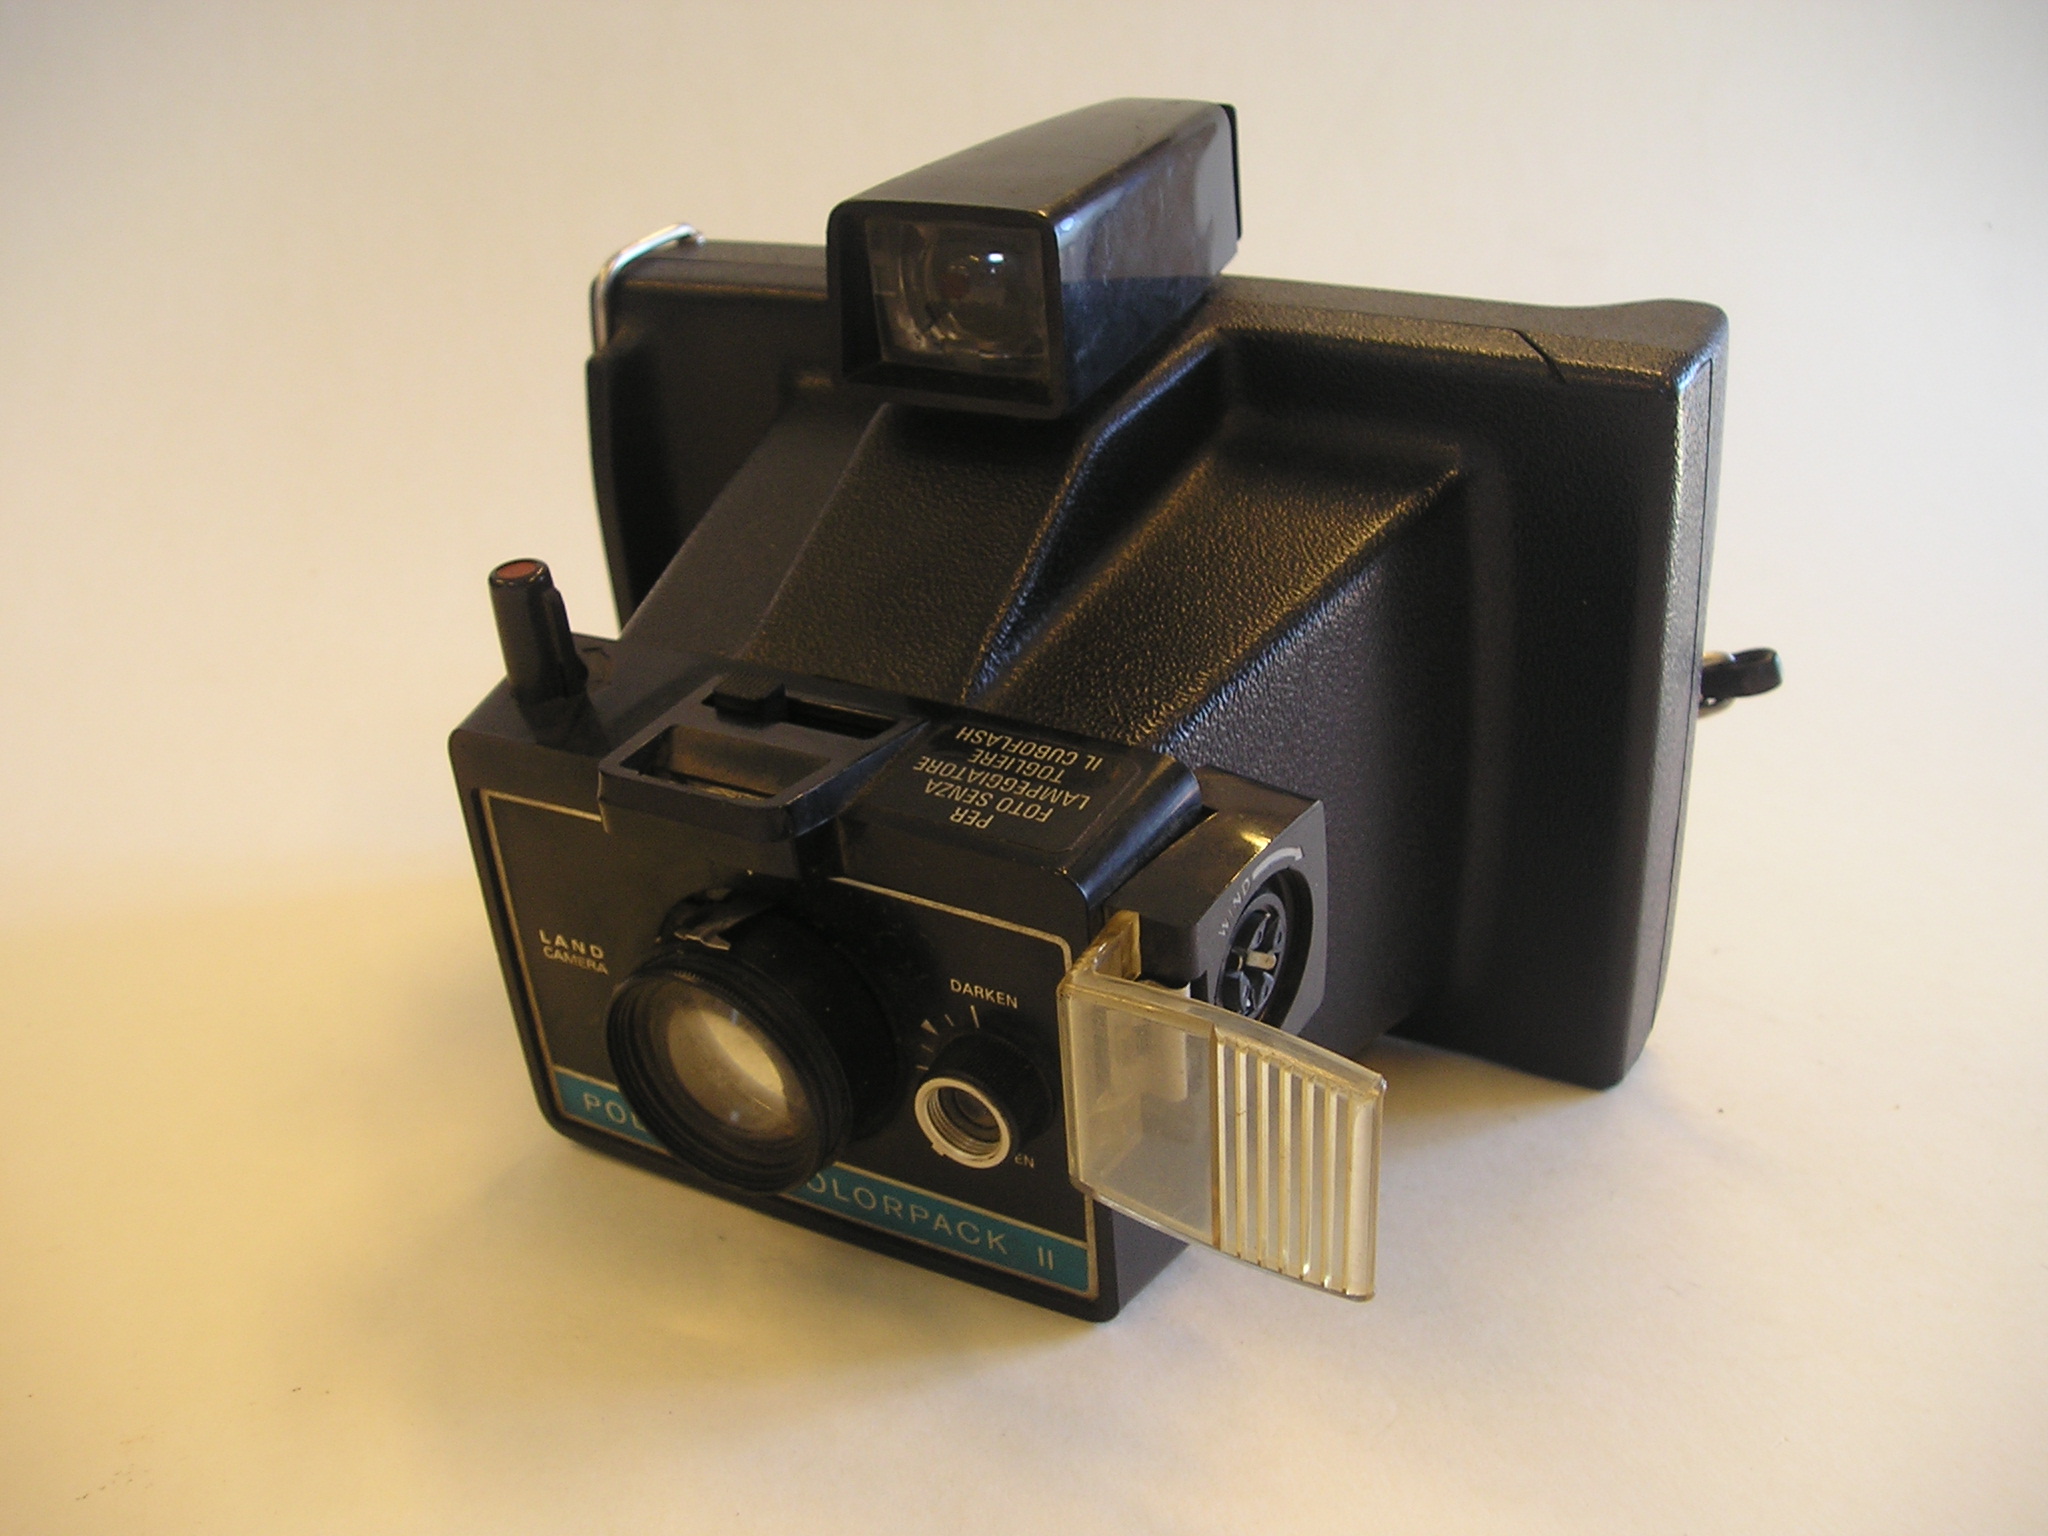 Polaroid ColorPack II